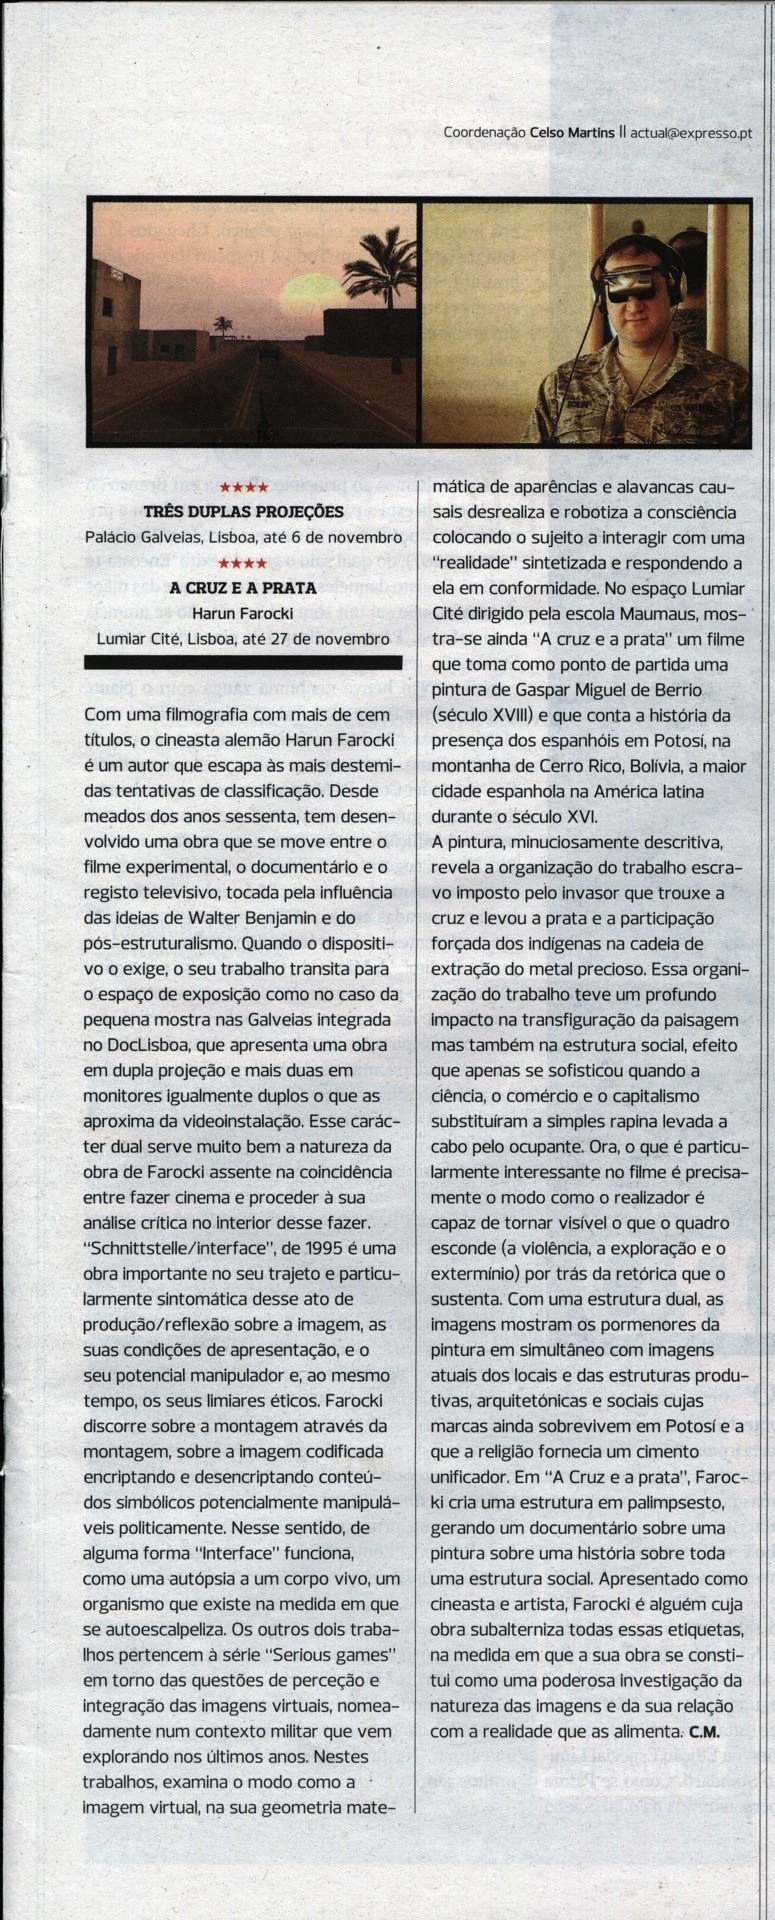 Expresso, Revista Actual | Celso Martins